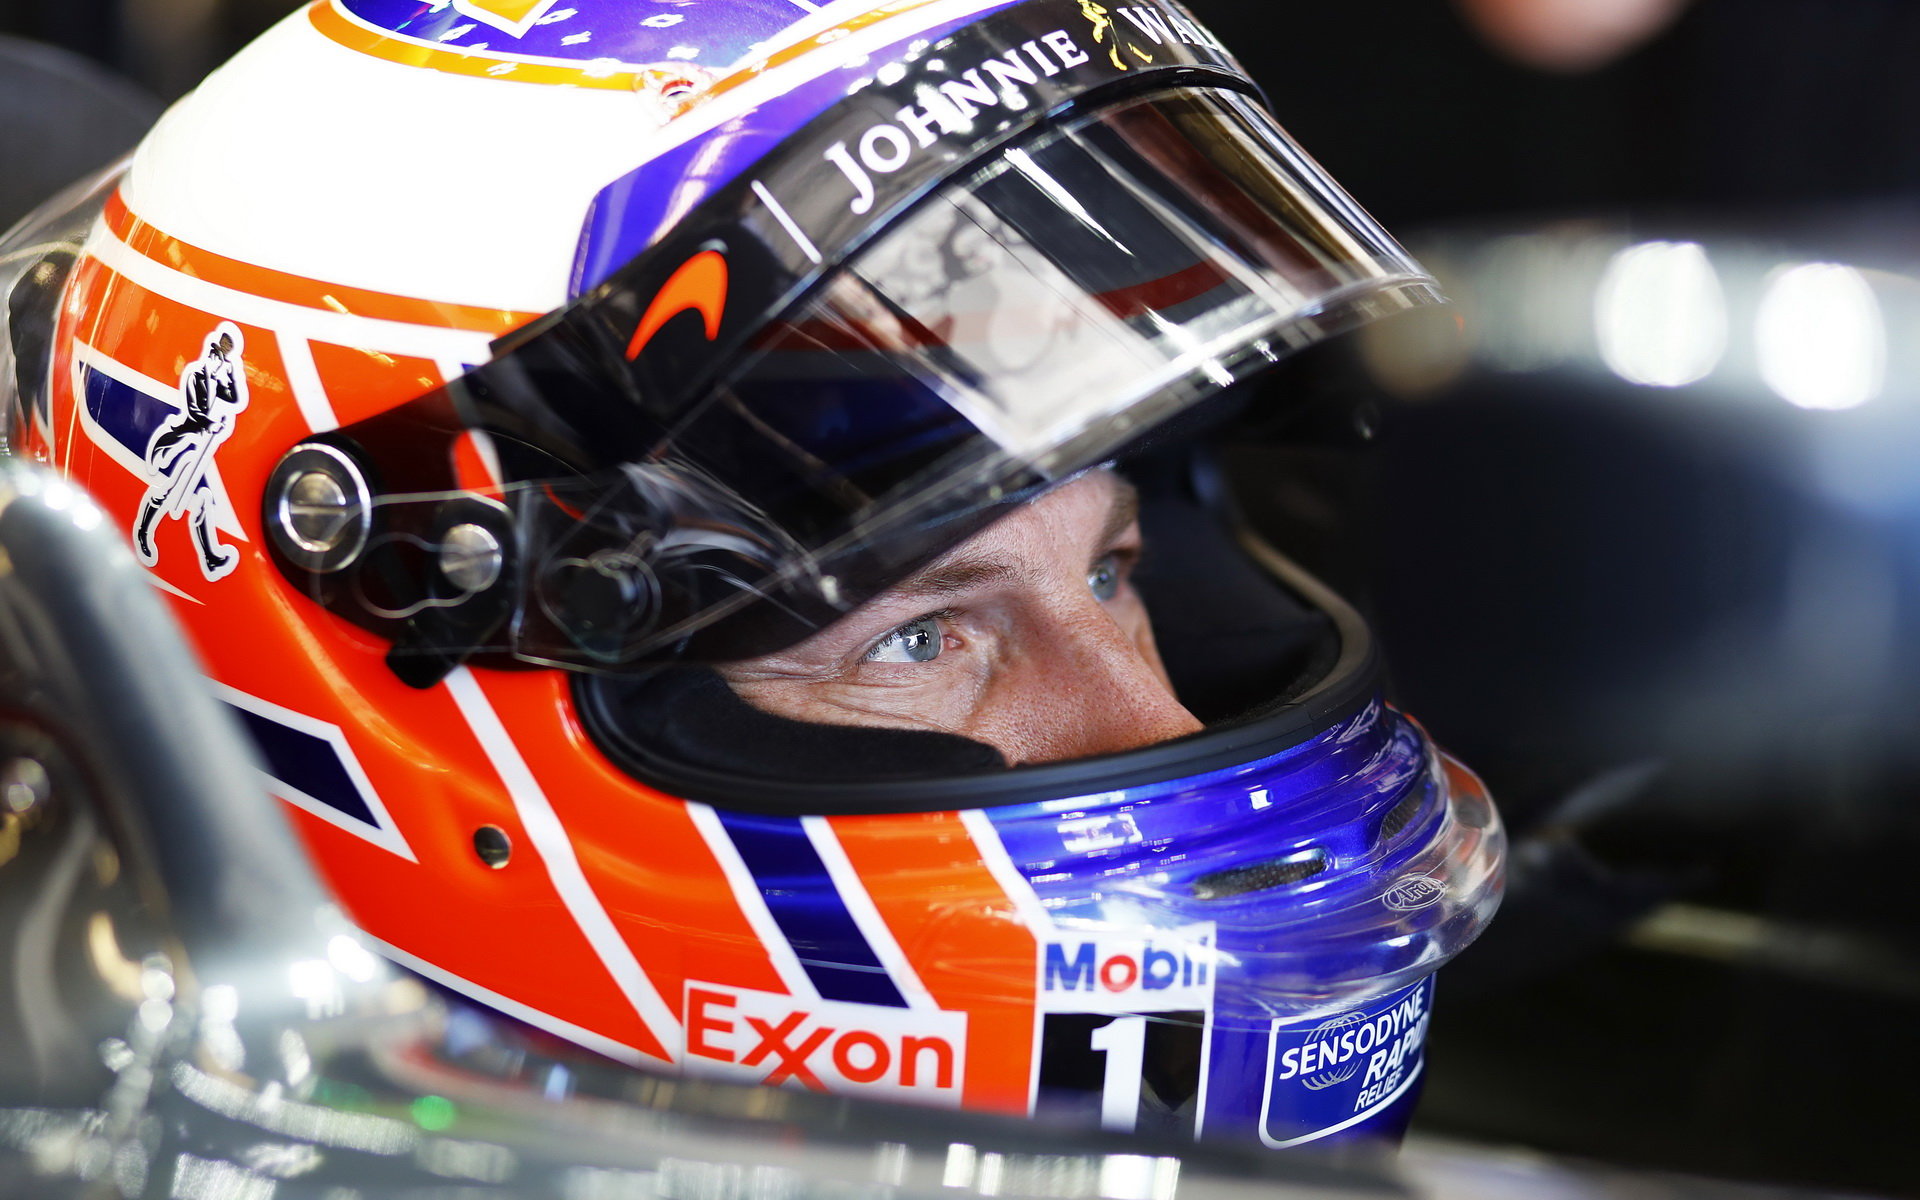 Jenson Button v kvalifikaci v Austinu